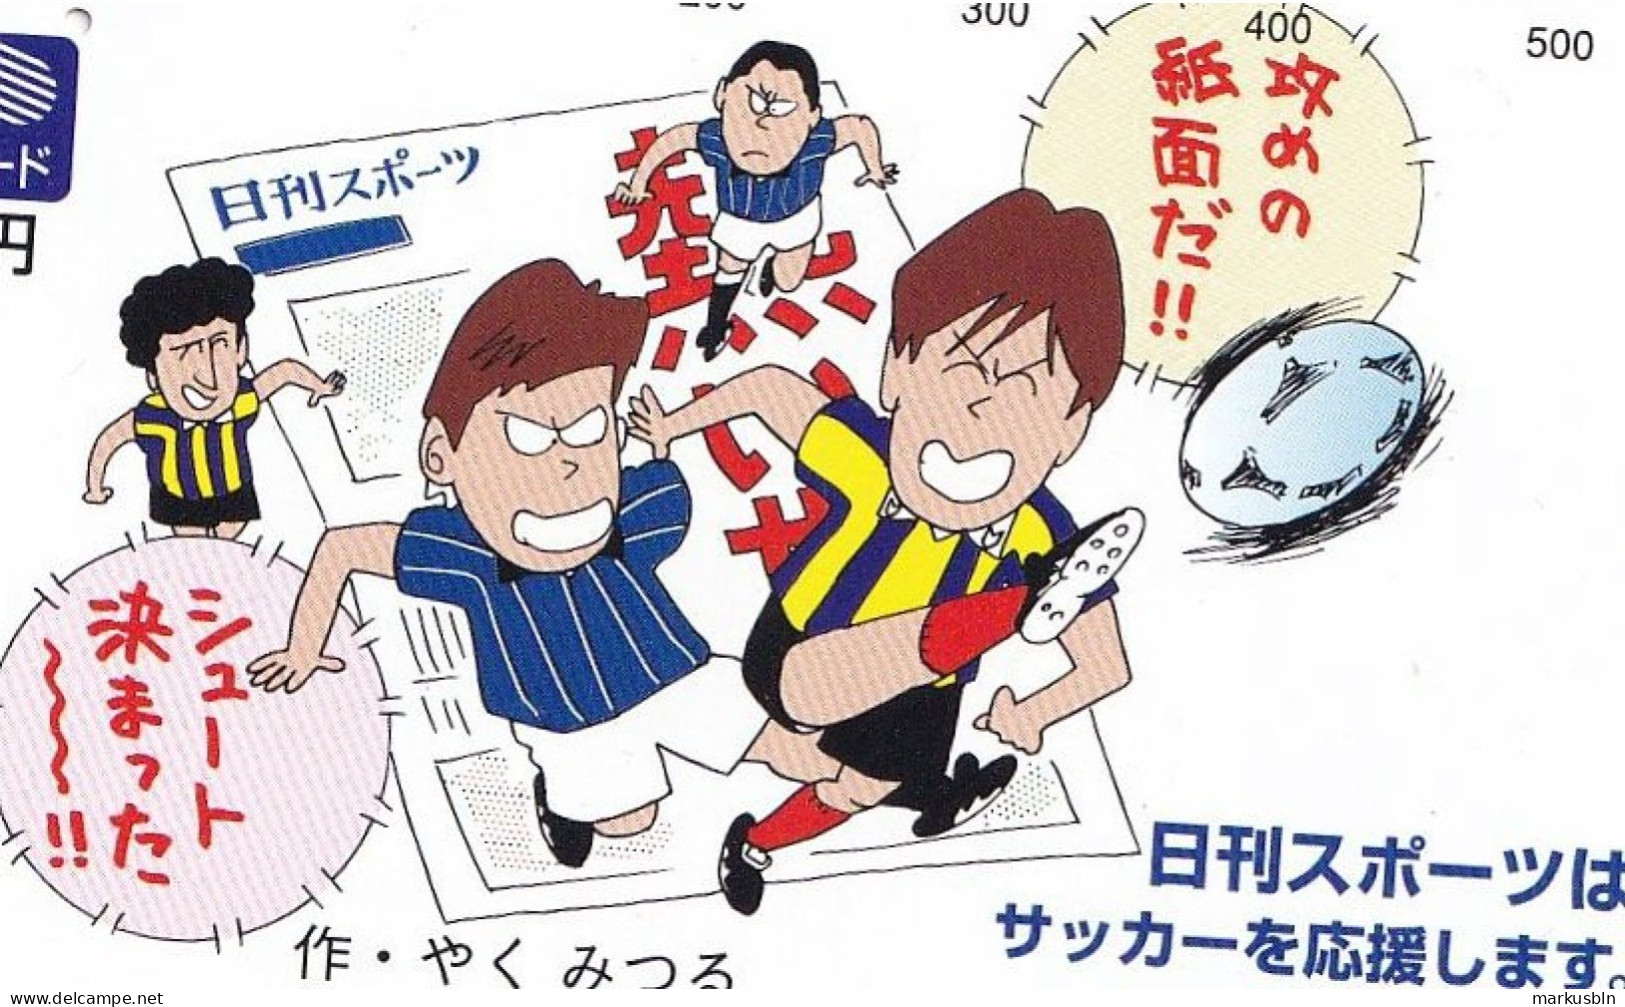 Japan Prepaid Library Card 500 - Nikkan Sports Advertisement Football Drawing Magazine - Japan